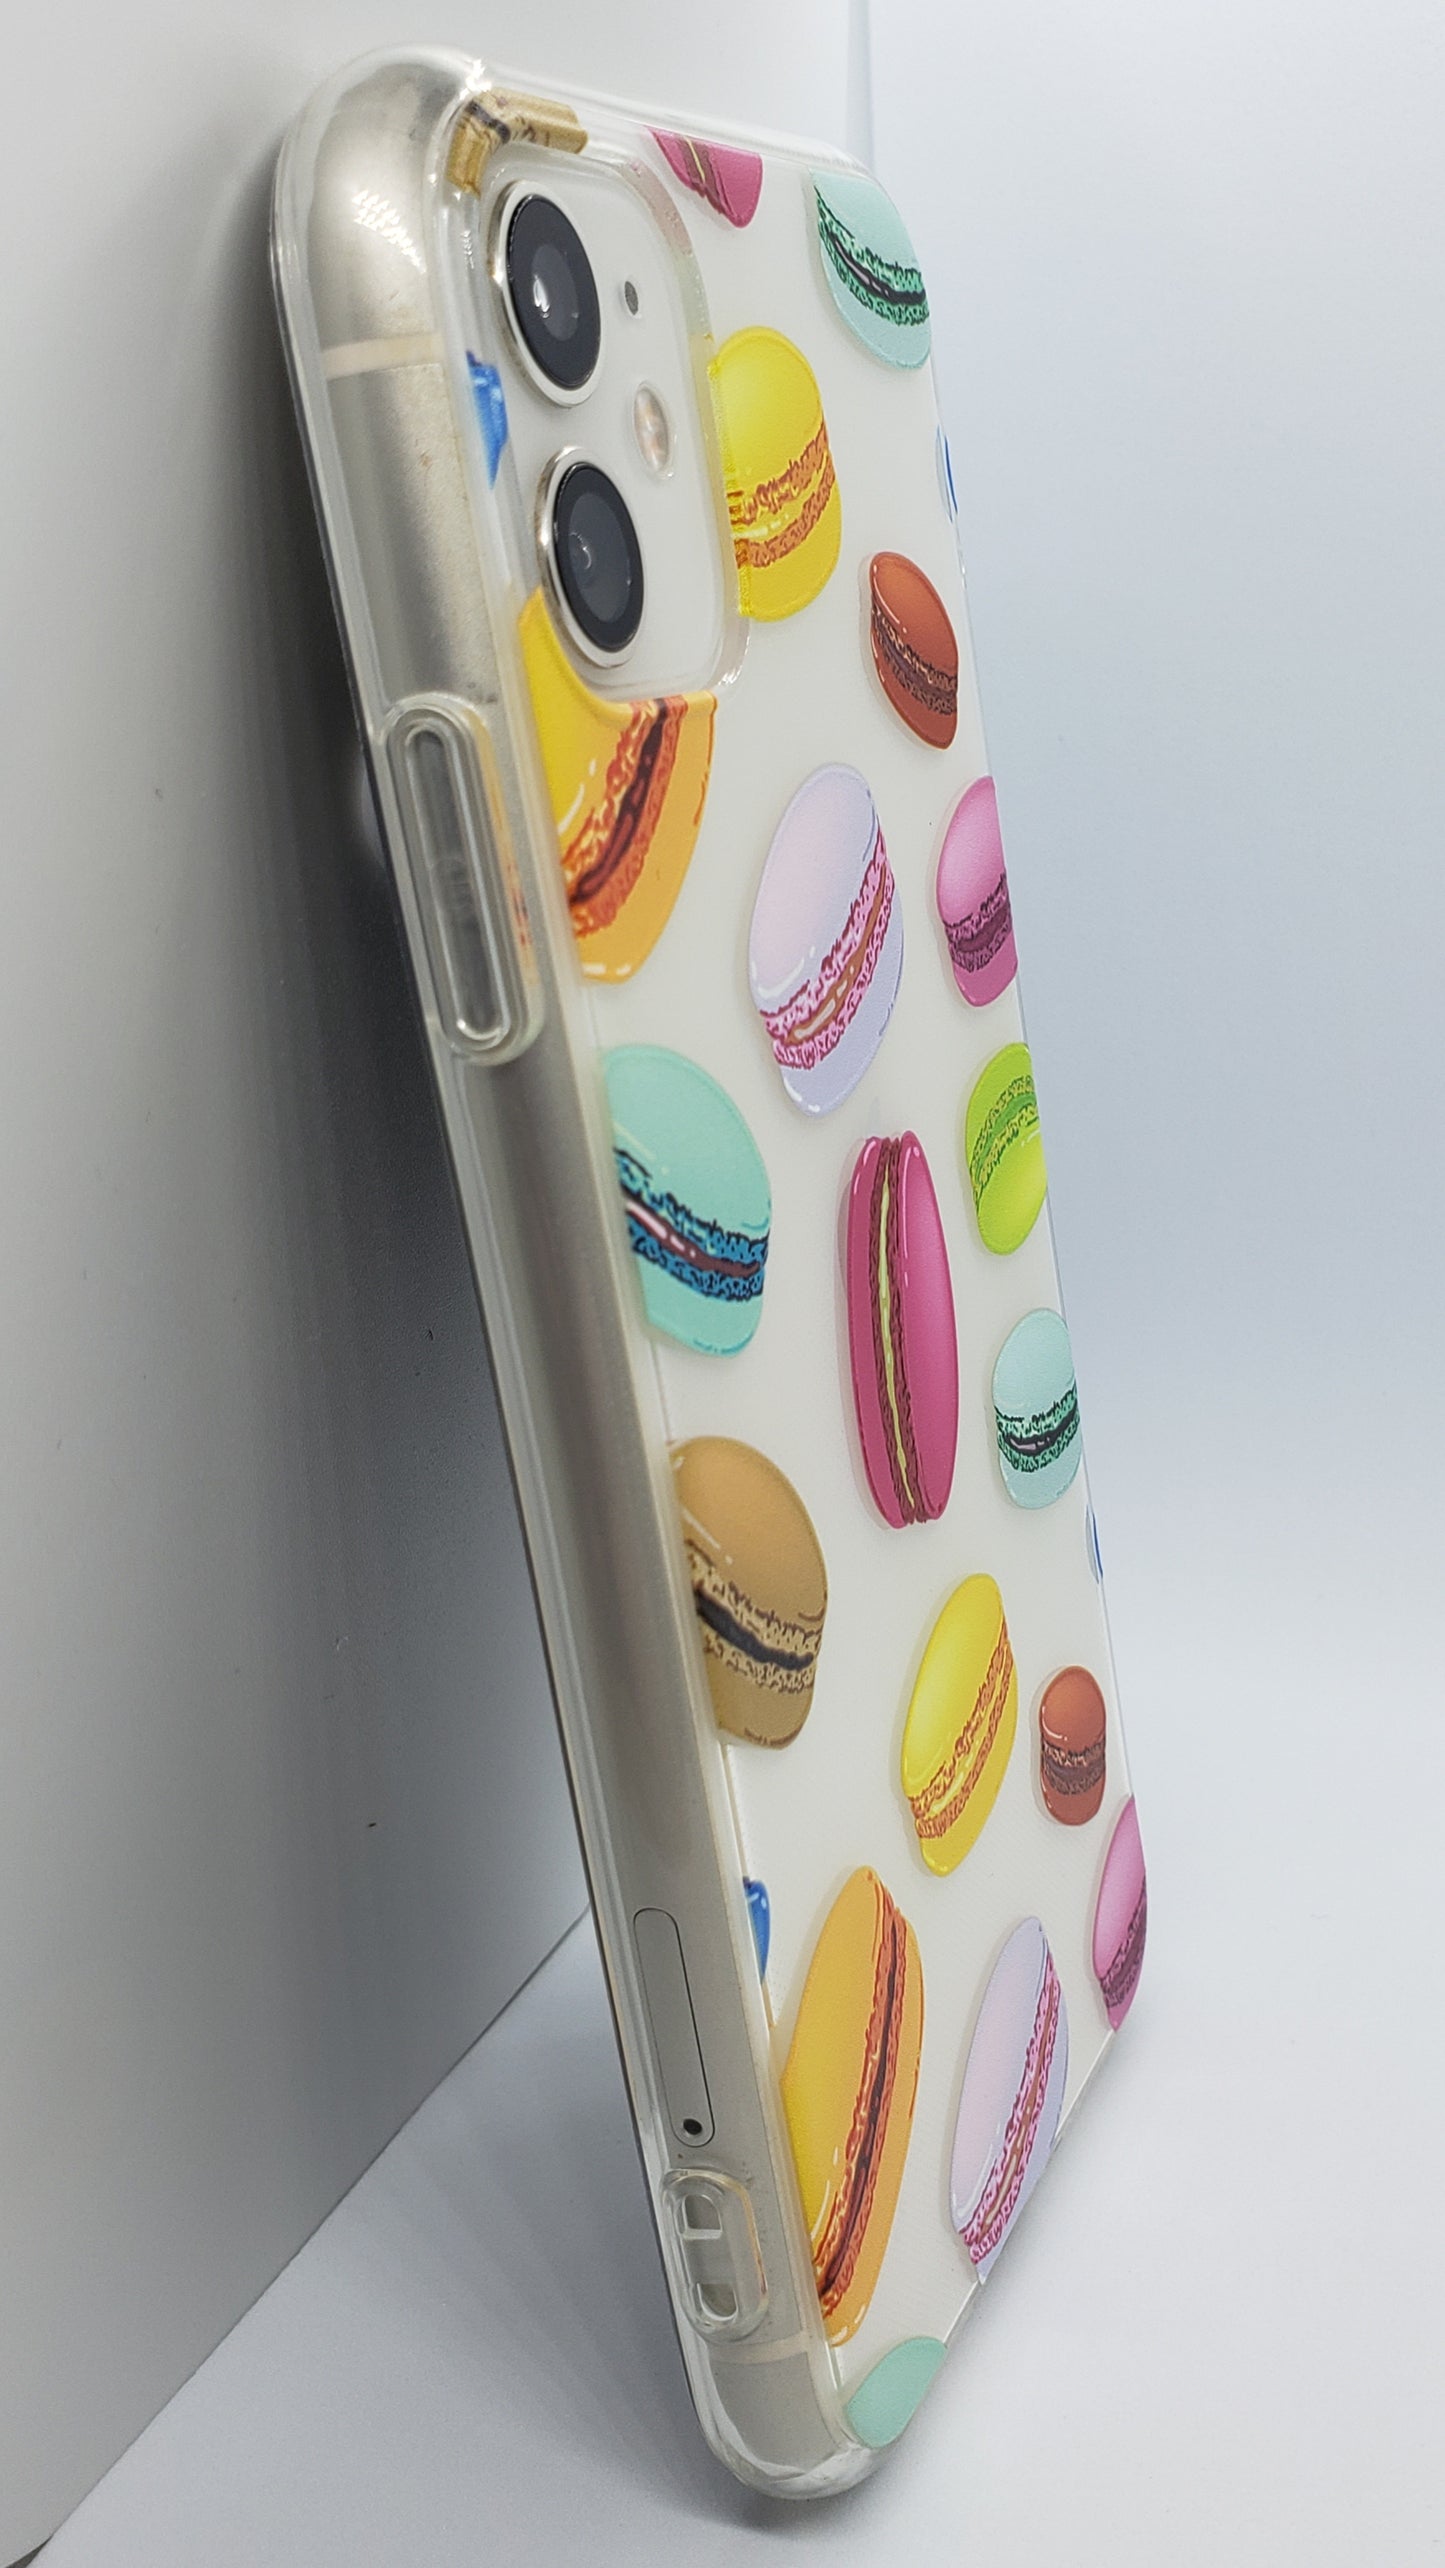 Macaron Clear iPhone Case